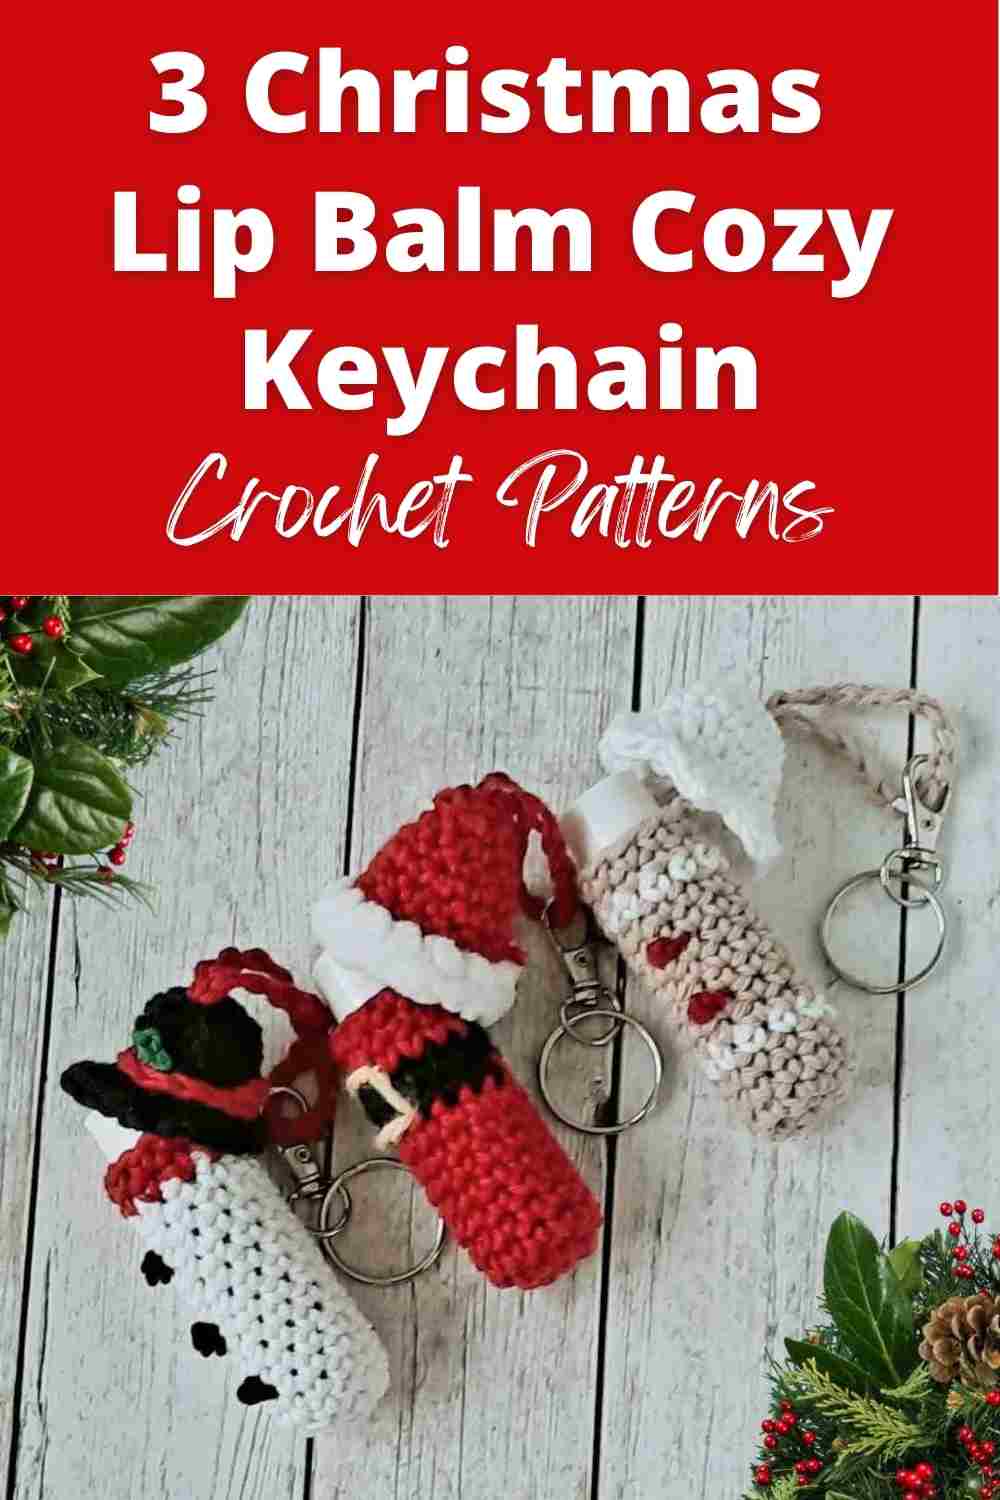 Christmas Lip Balm Cozy Keychain Patterns